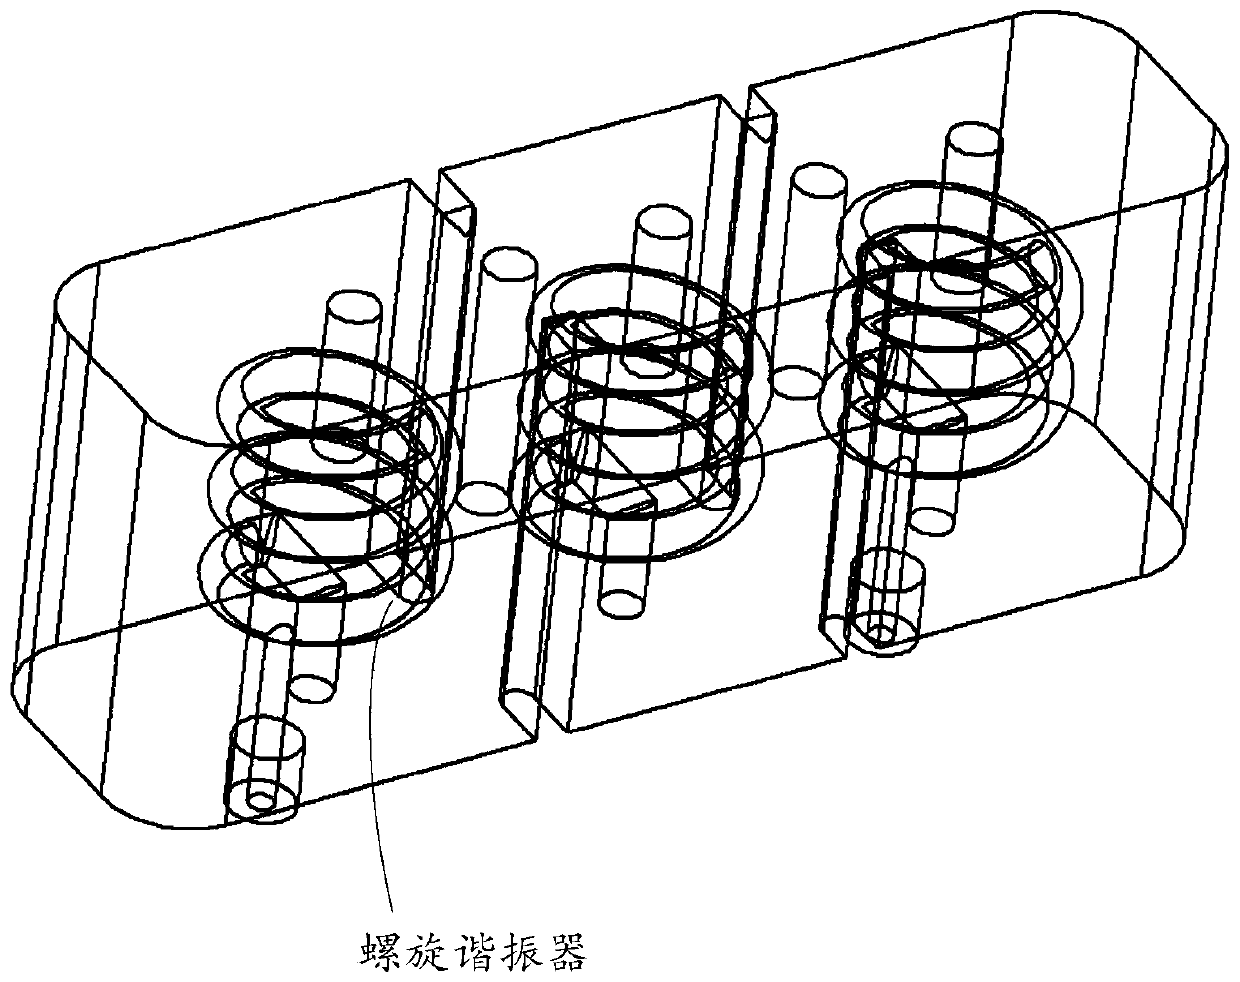 Co-cavity spiral resonance filter